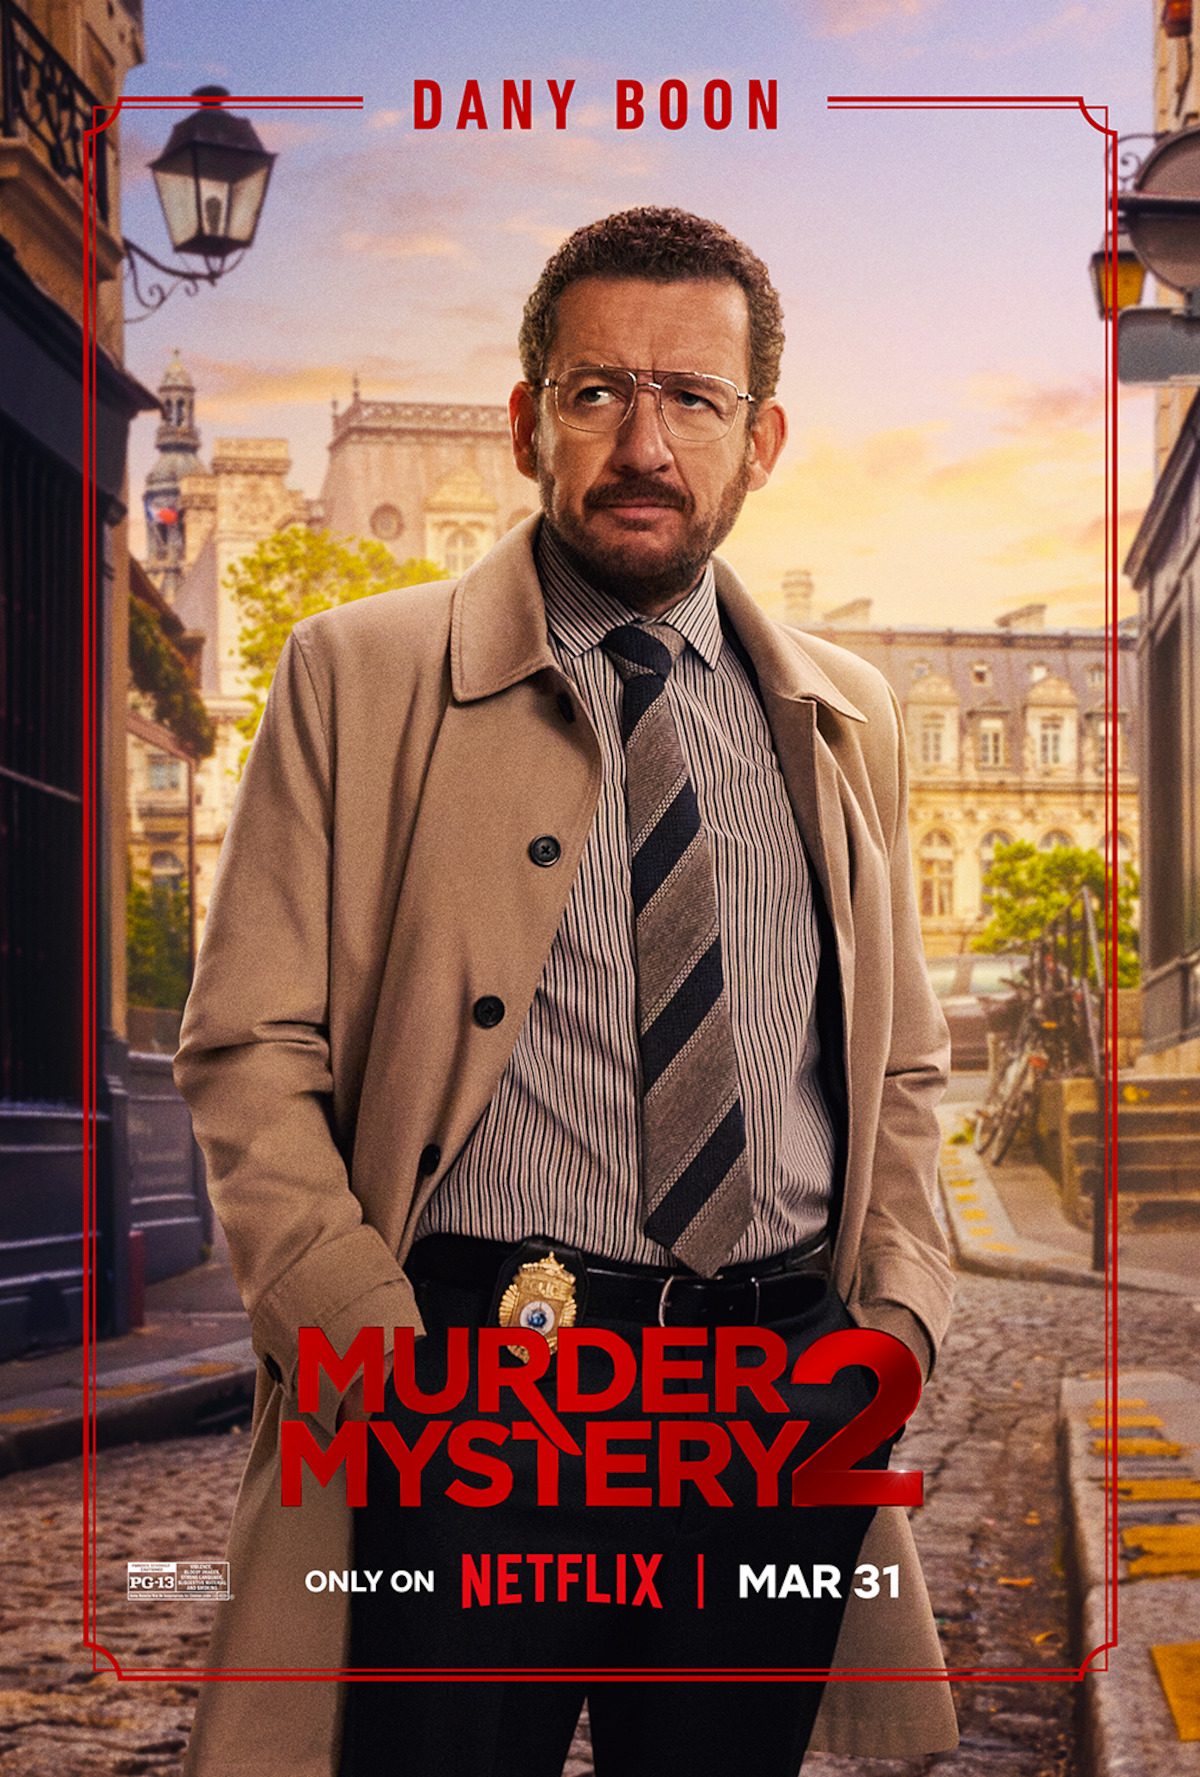 Netflix's 'Murder Mystery 2' hits entertainment bullseye - The